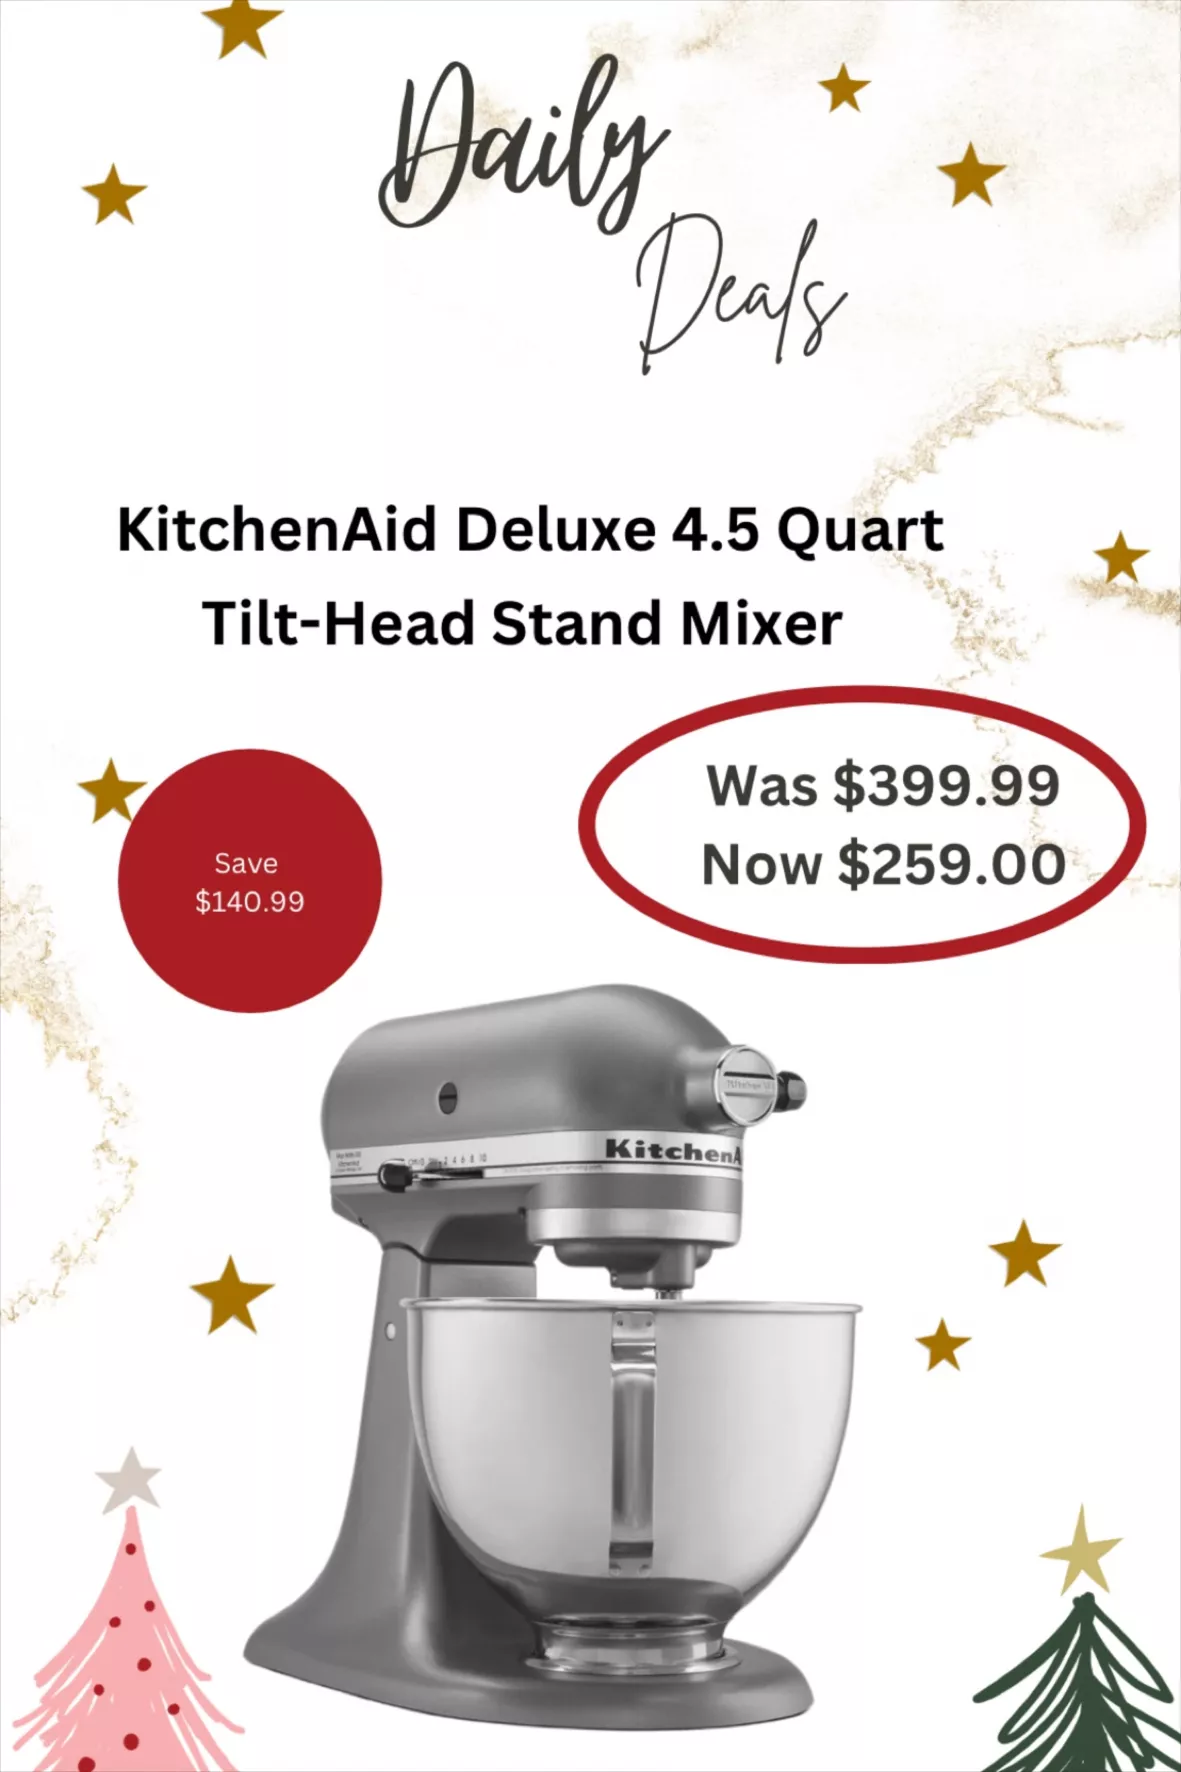 Deluxe 4.5 Quart Tilt-Head Stand Mixer